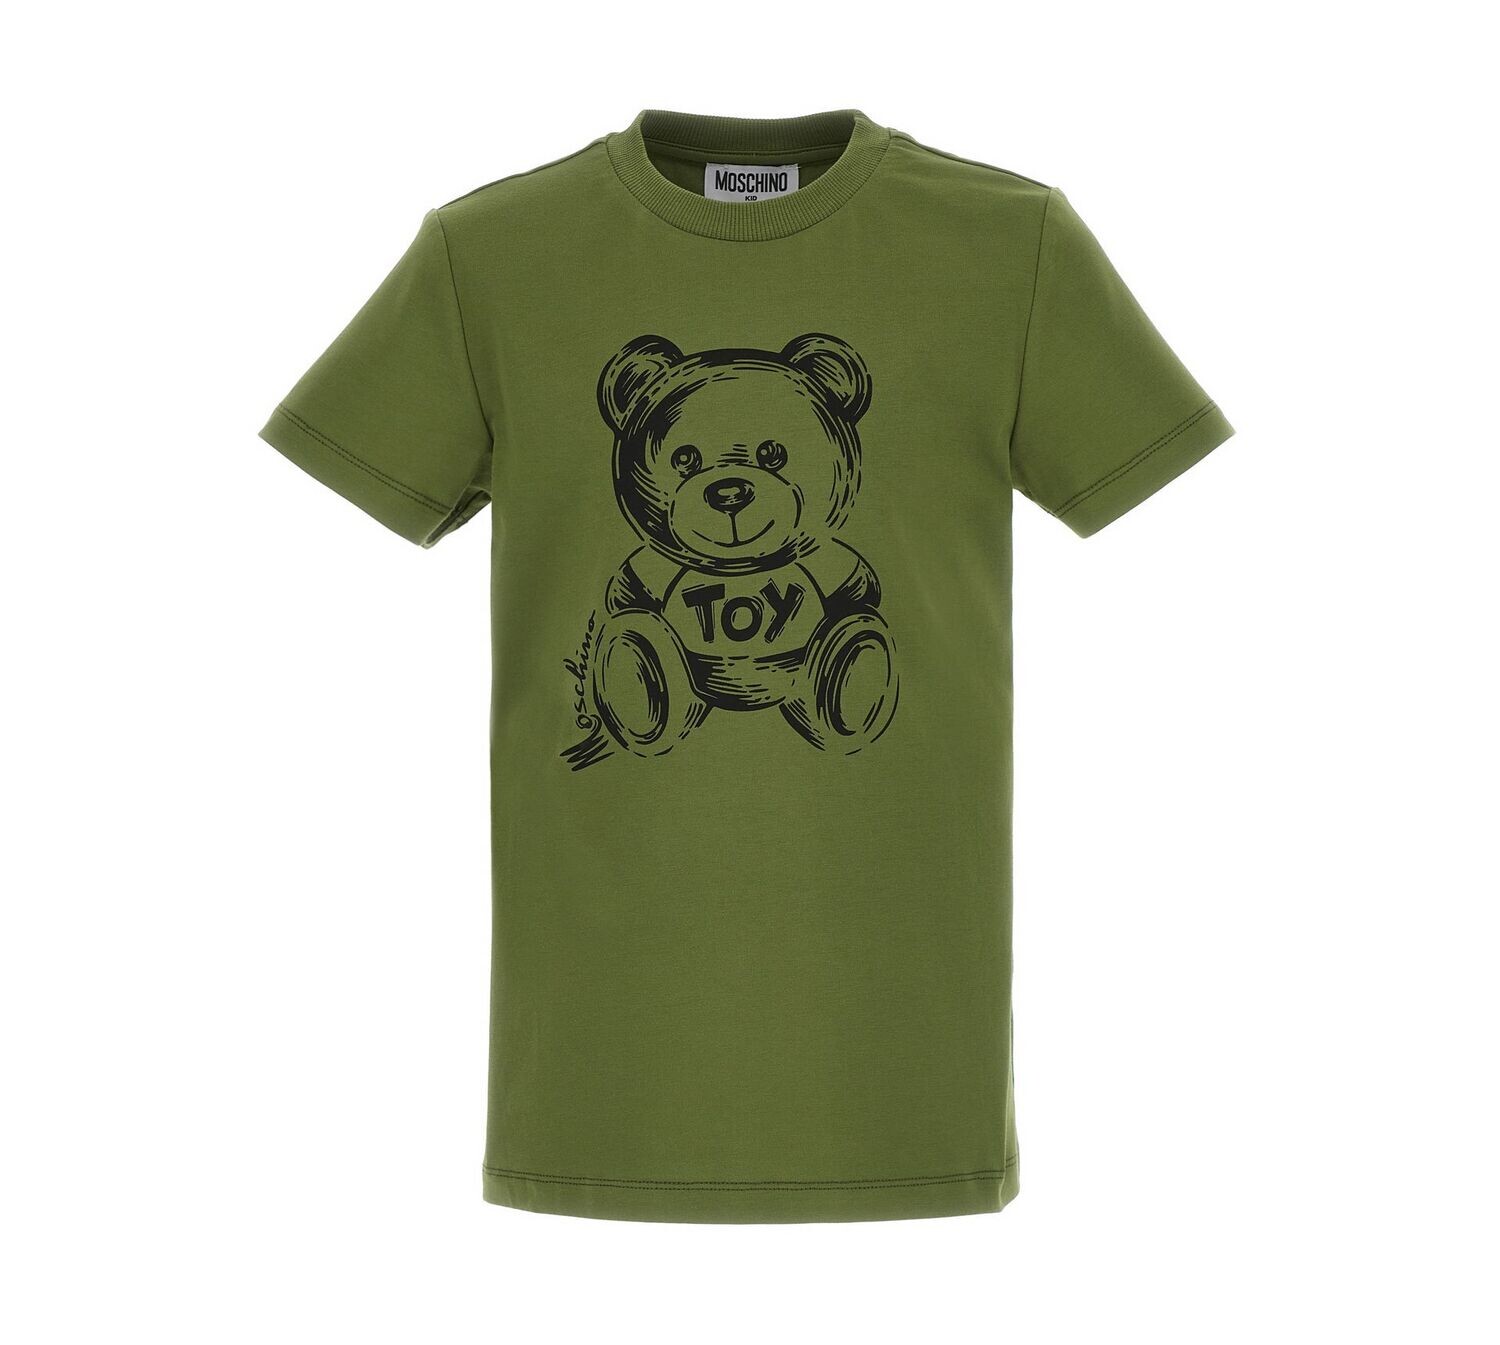 Moschino - T-shirt verde Teddy, Size: 4 anni